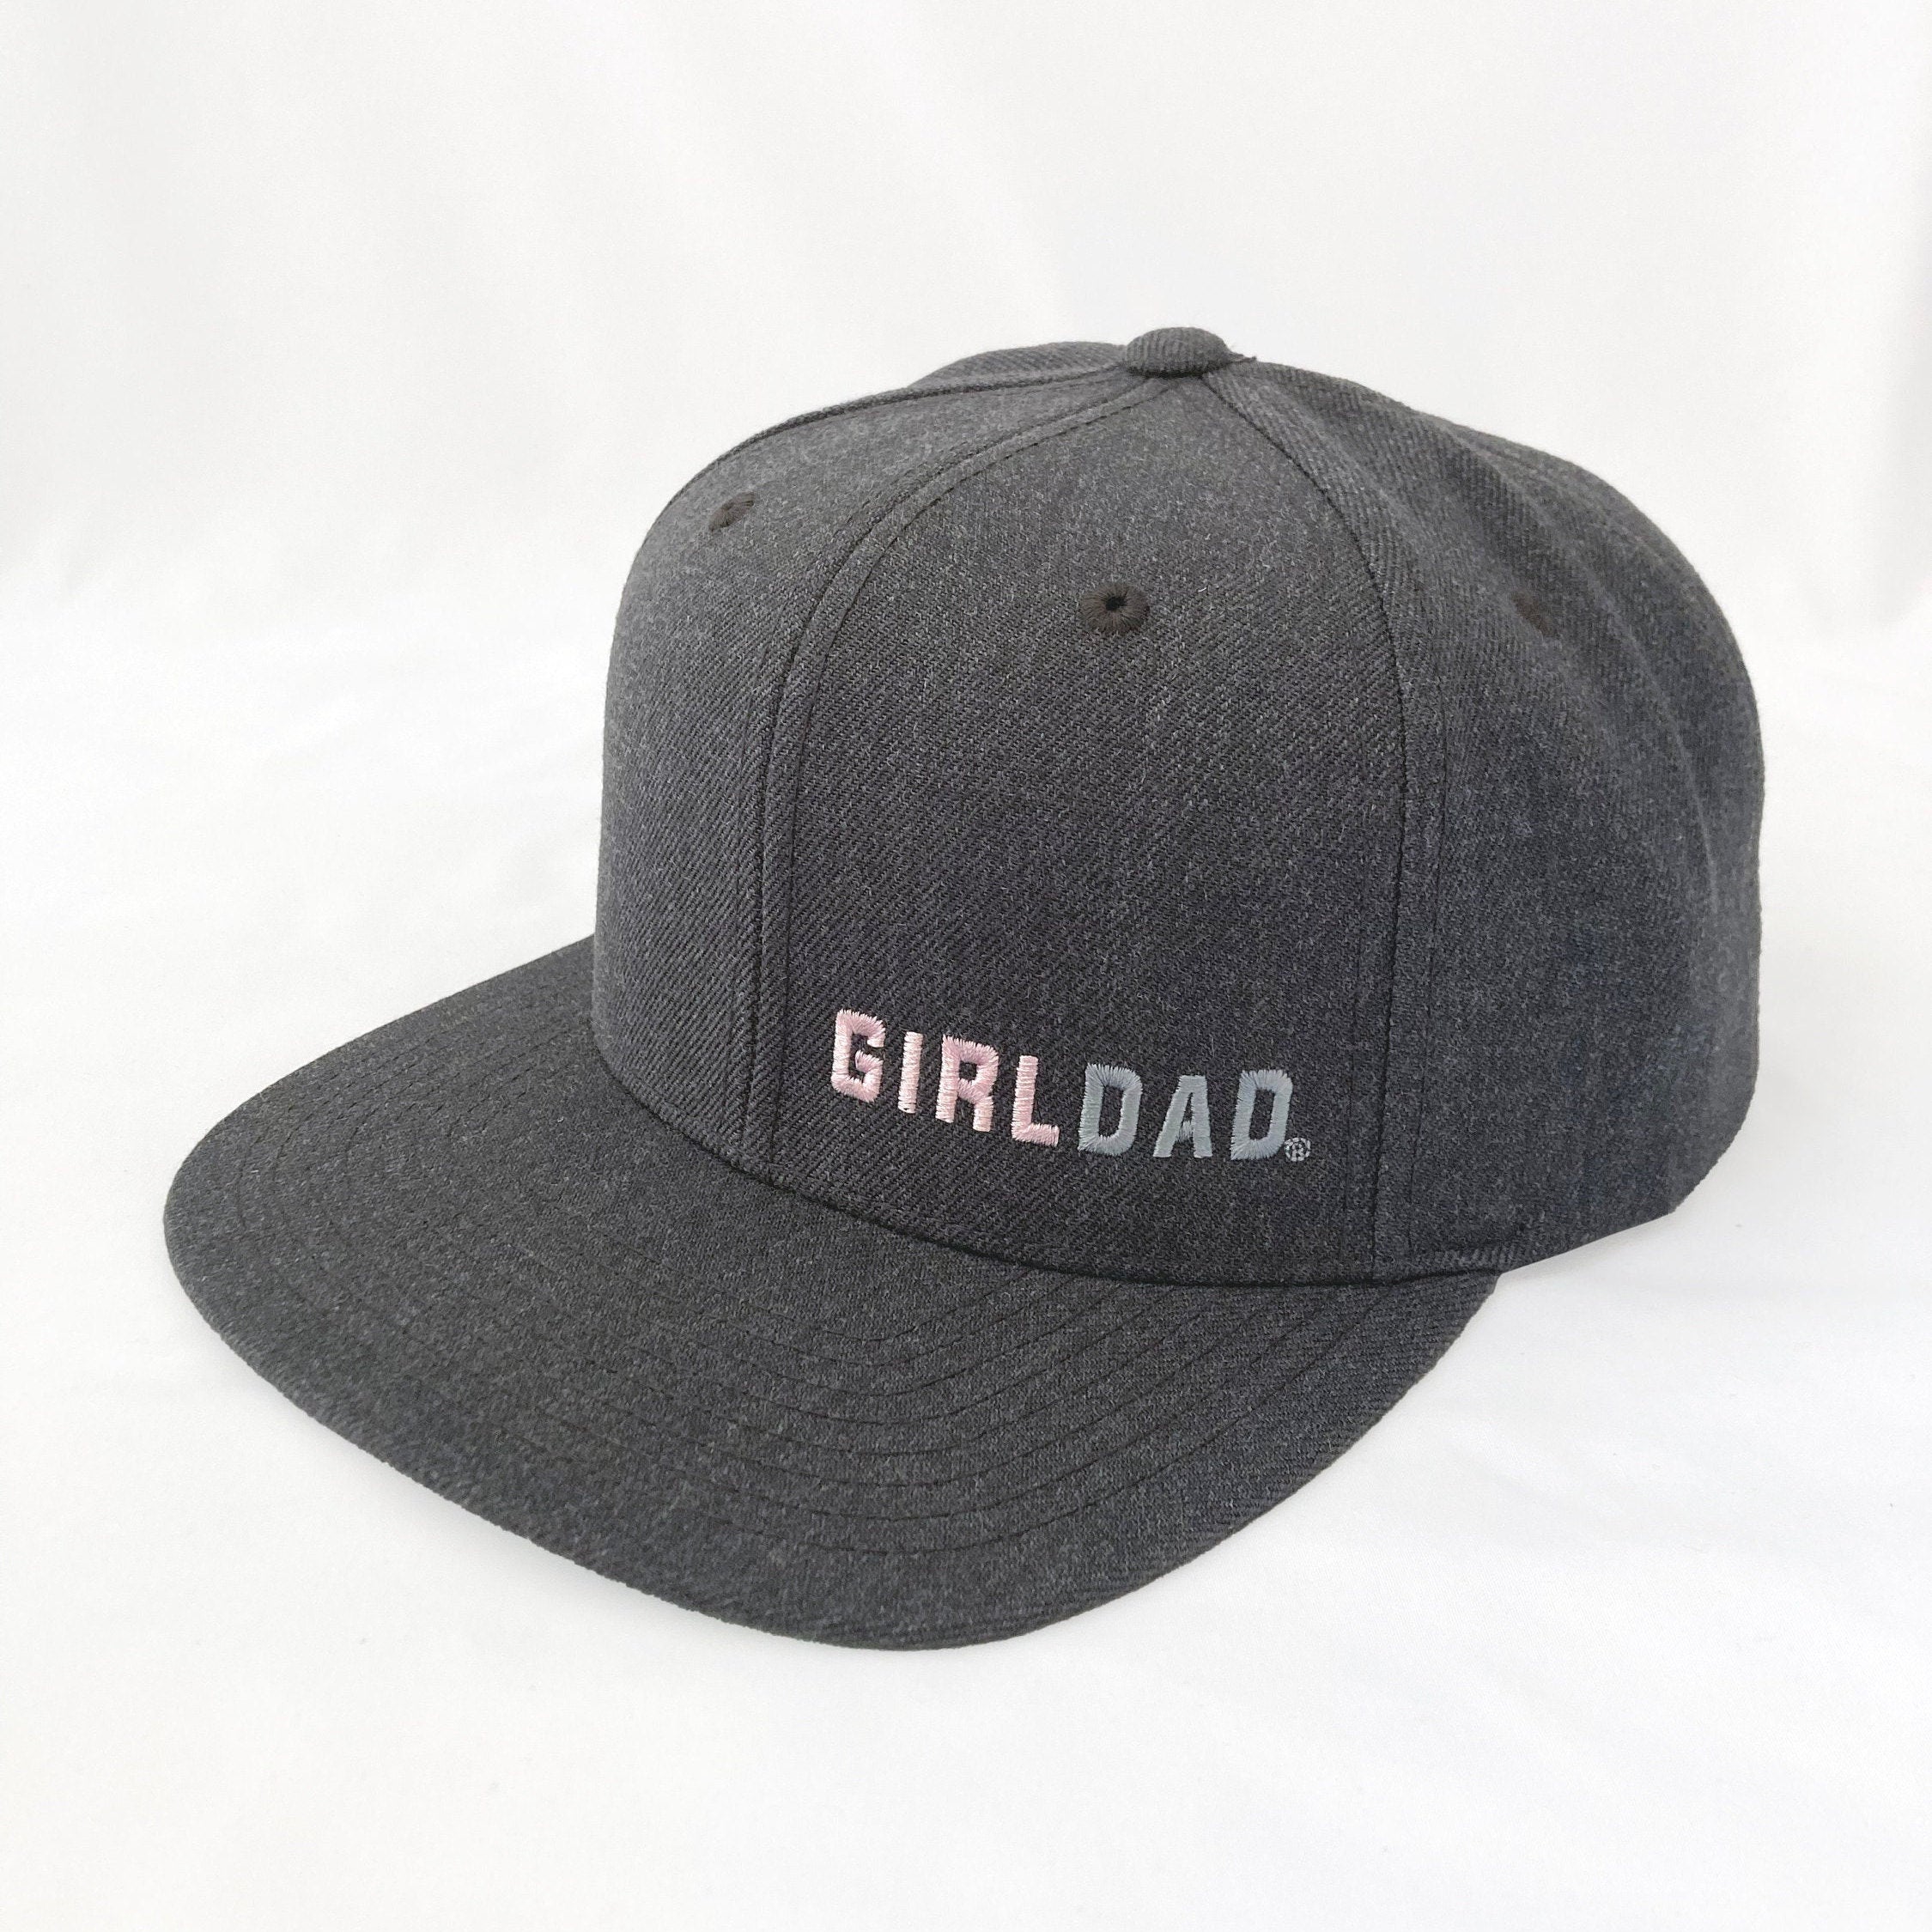 Girldad® Dark Heather Grey with Pink & Silver Embroidery Hat